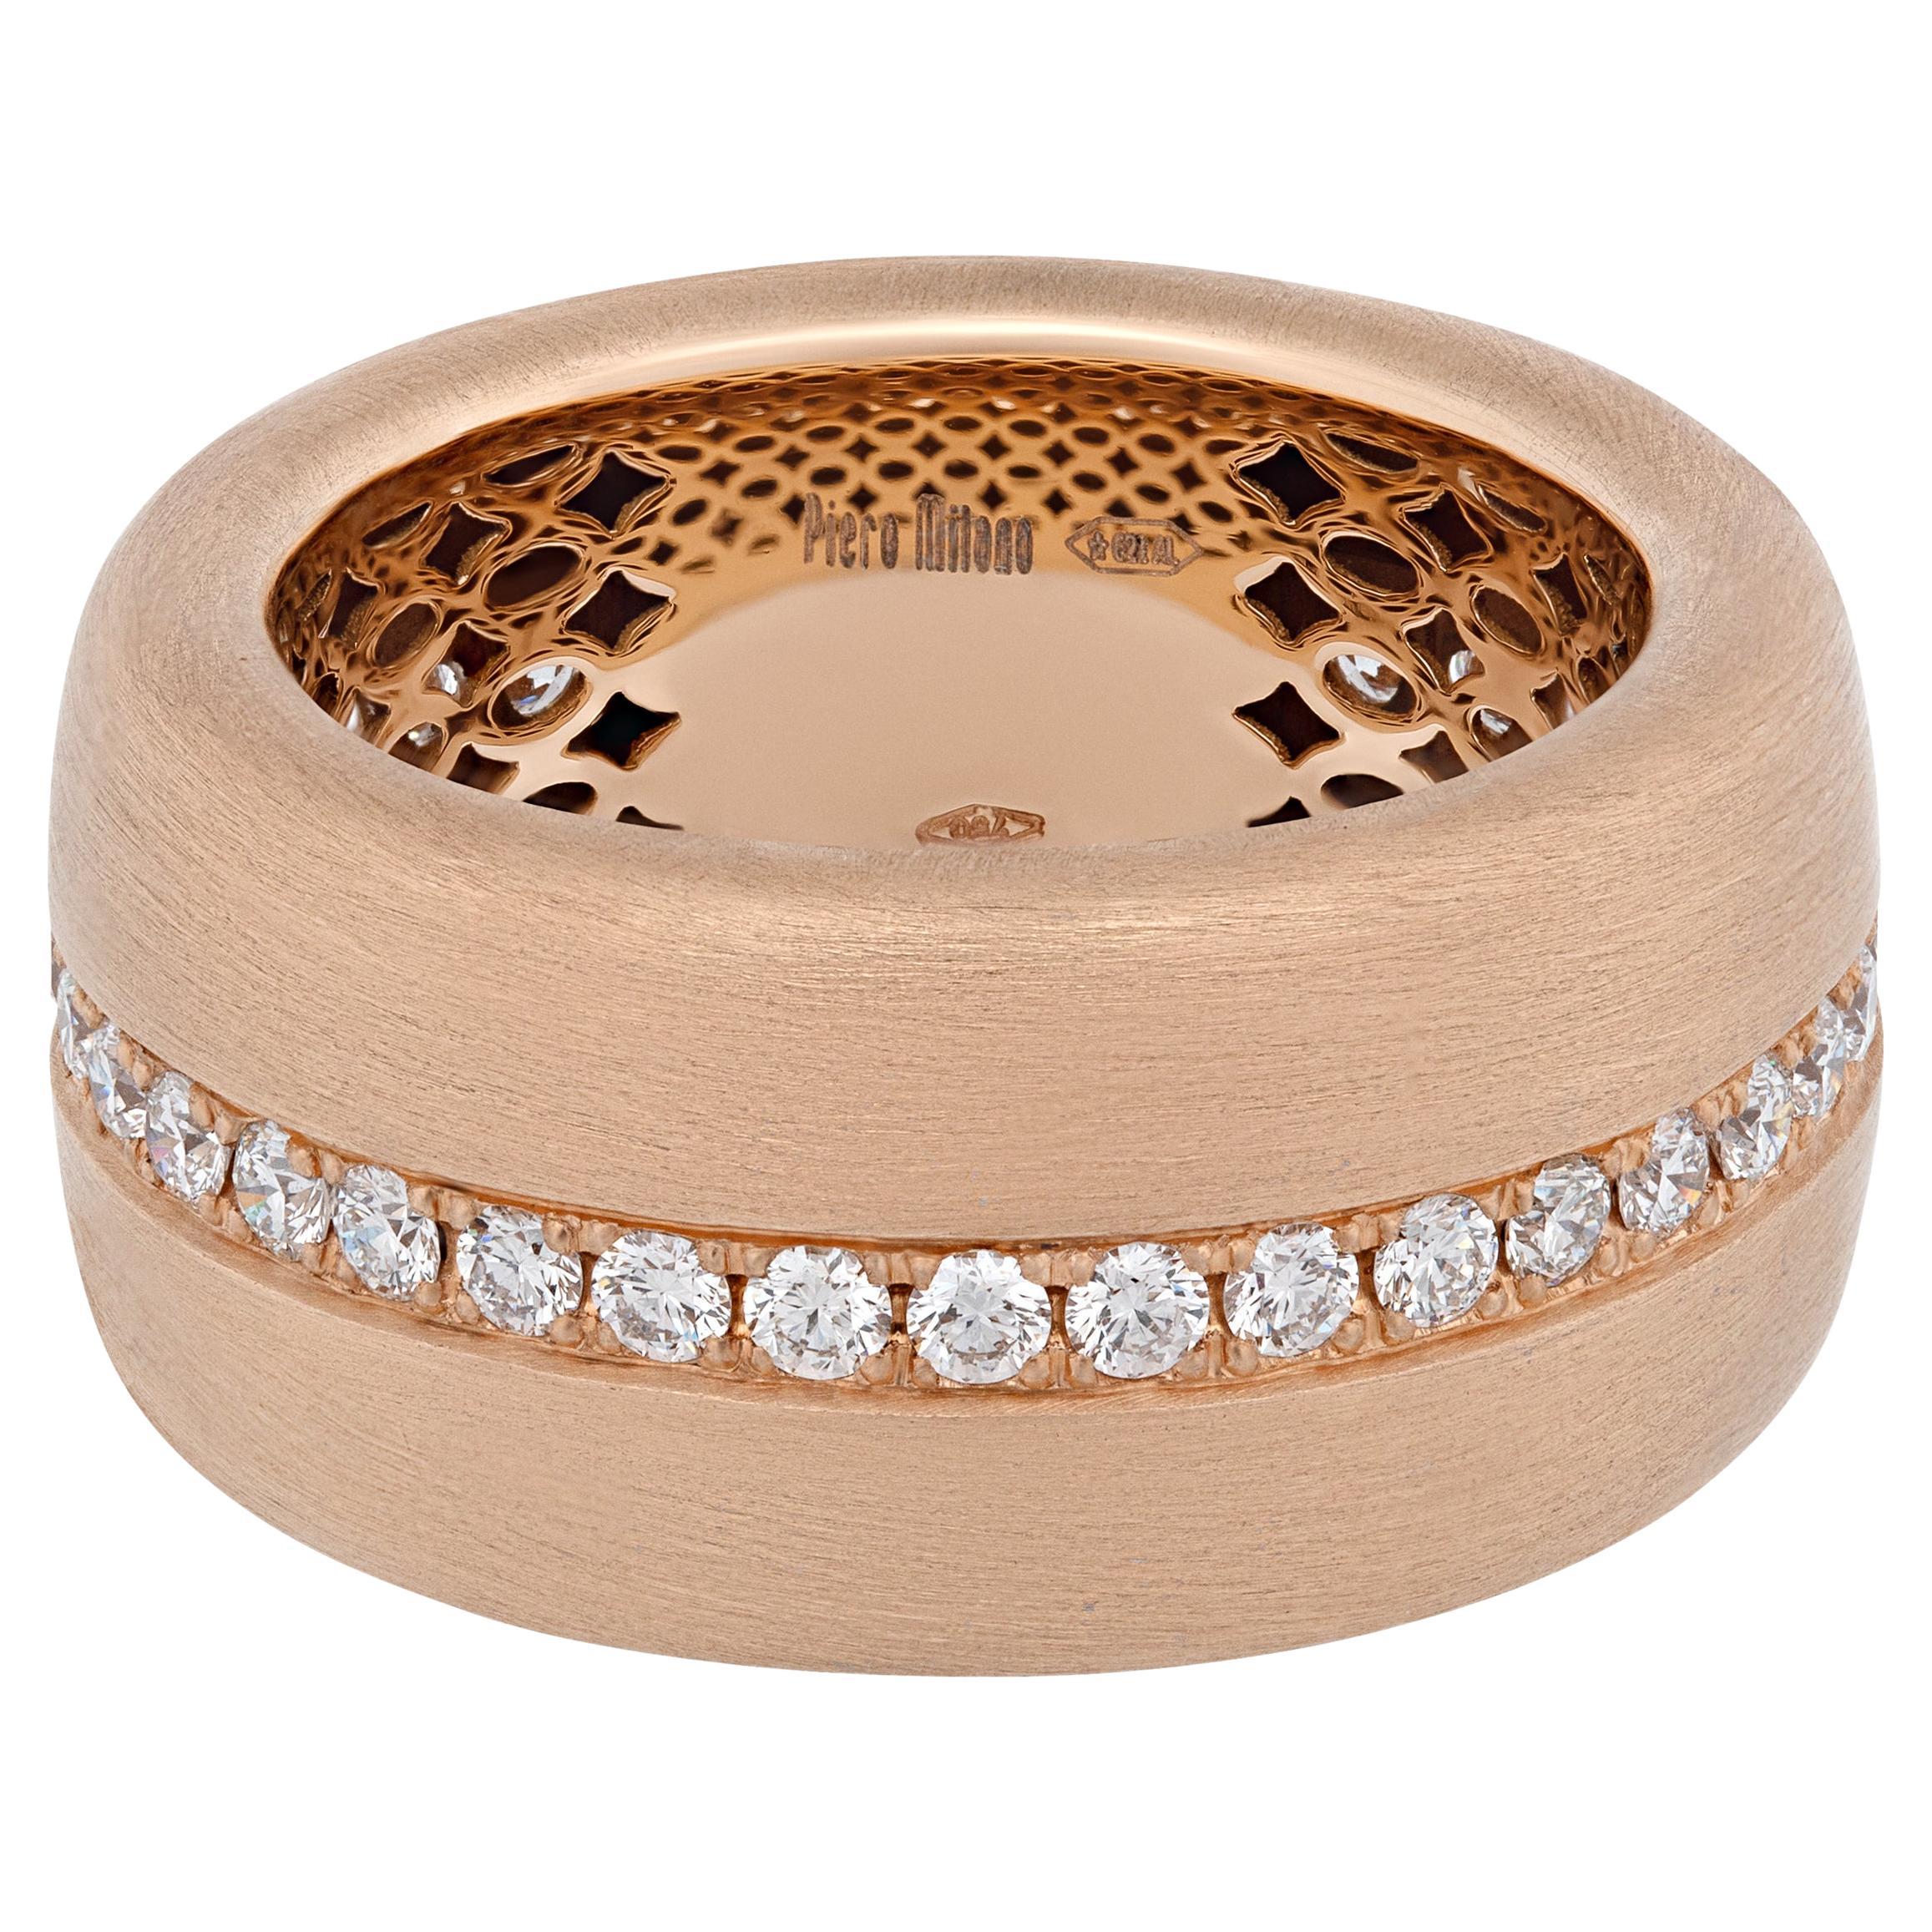 Piero Milano 18K Rose Gold Diamond Ring Sz 7 For Sale